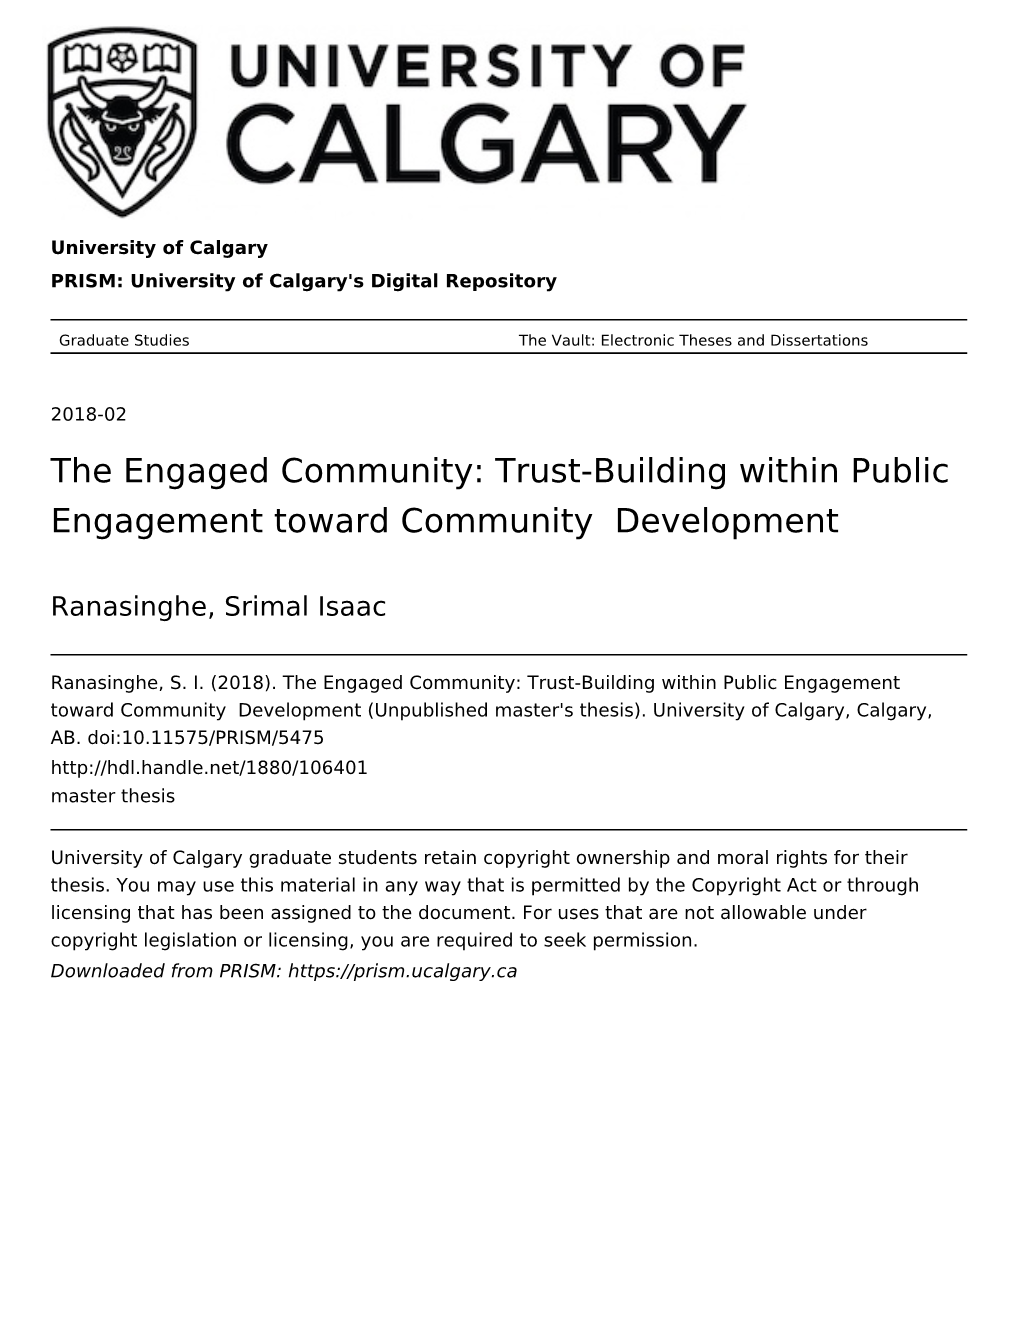 The Engaged Community: Trust-Building Within Public Engagement Toward Community Development